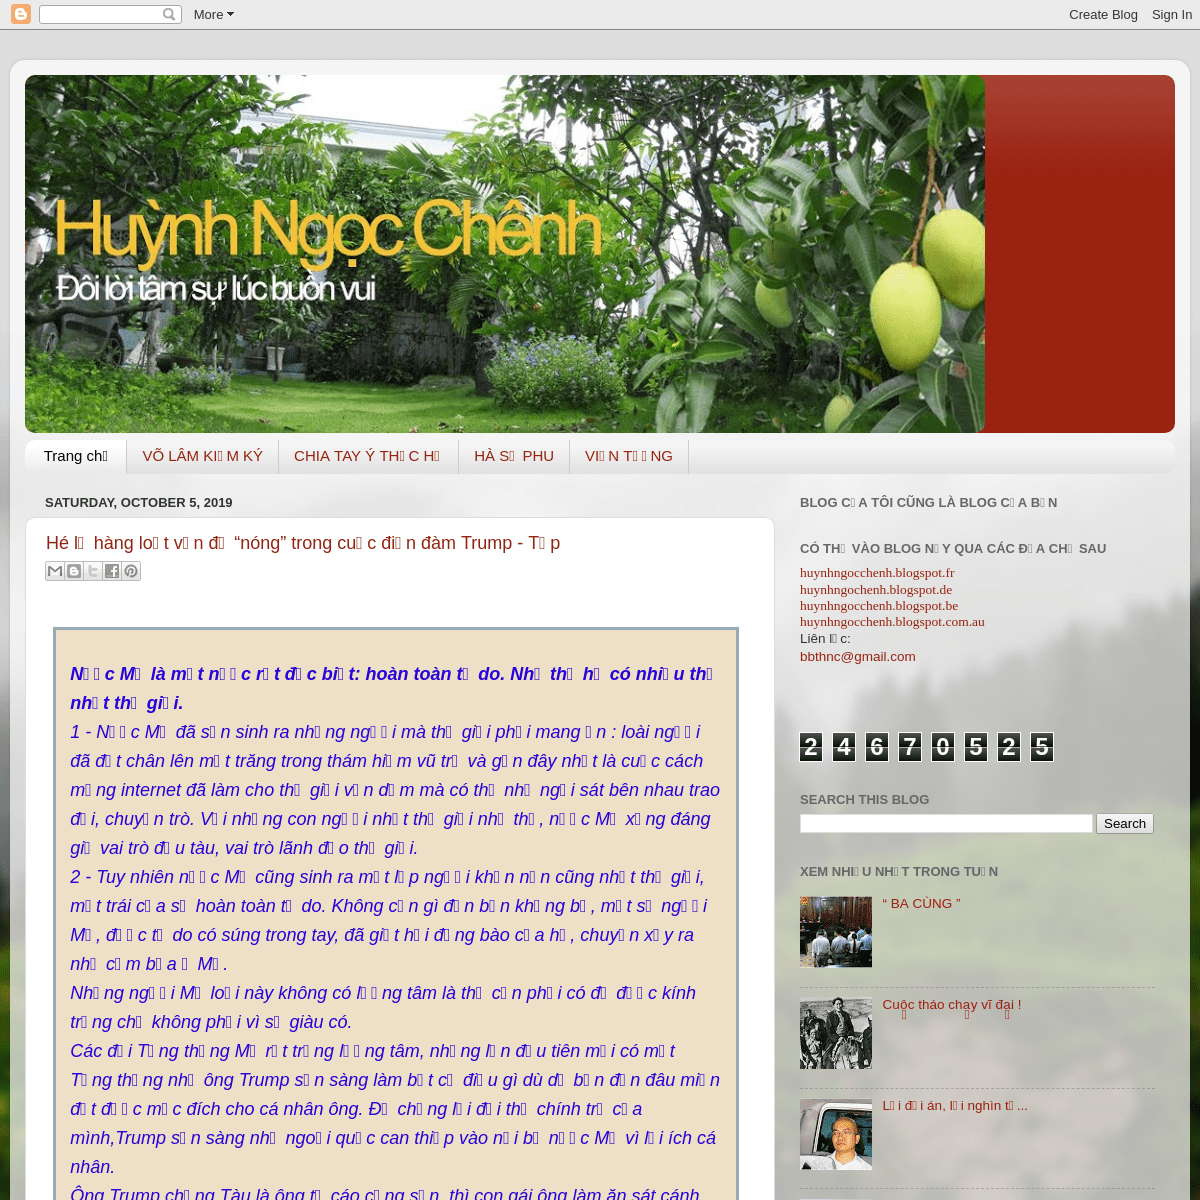 A complete backup of huynhngocchenh.blogspot.com